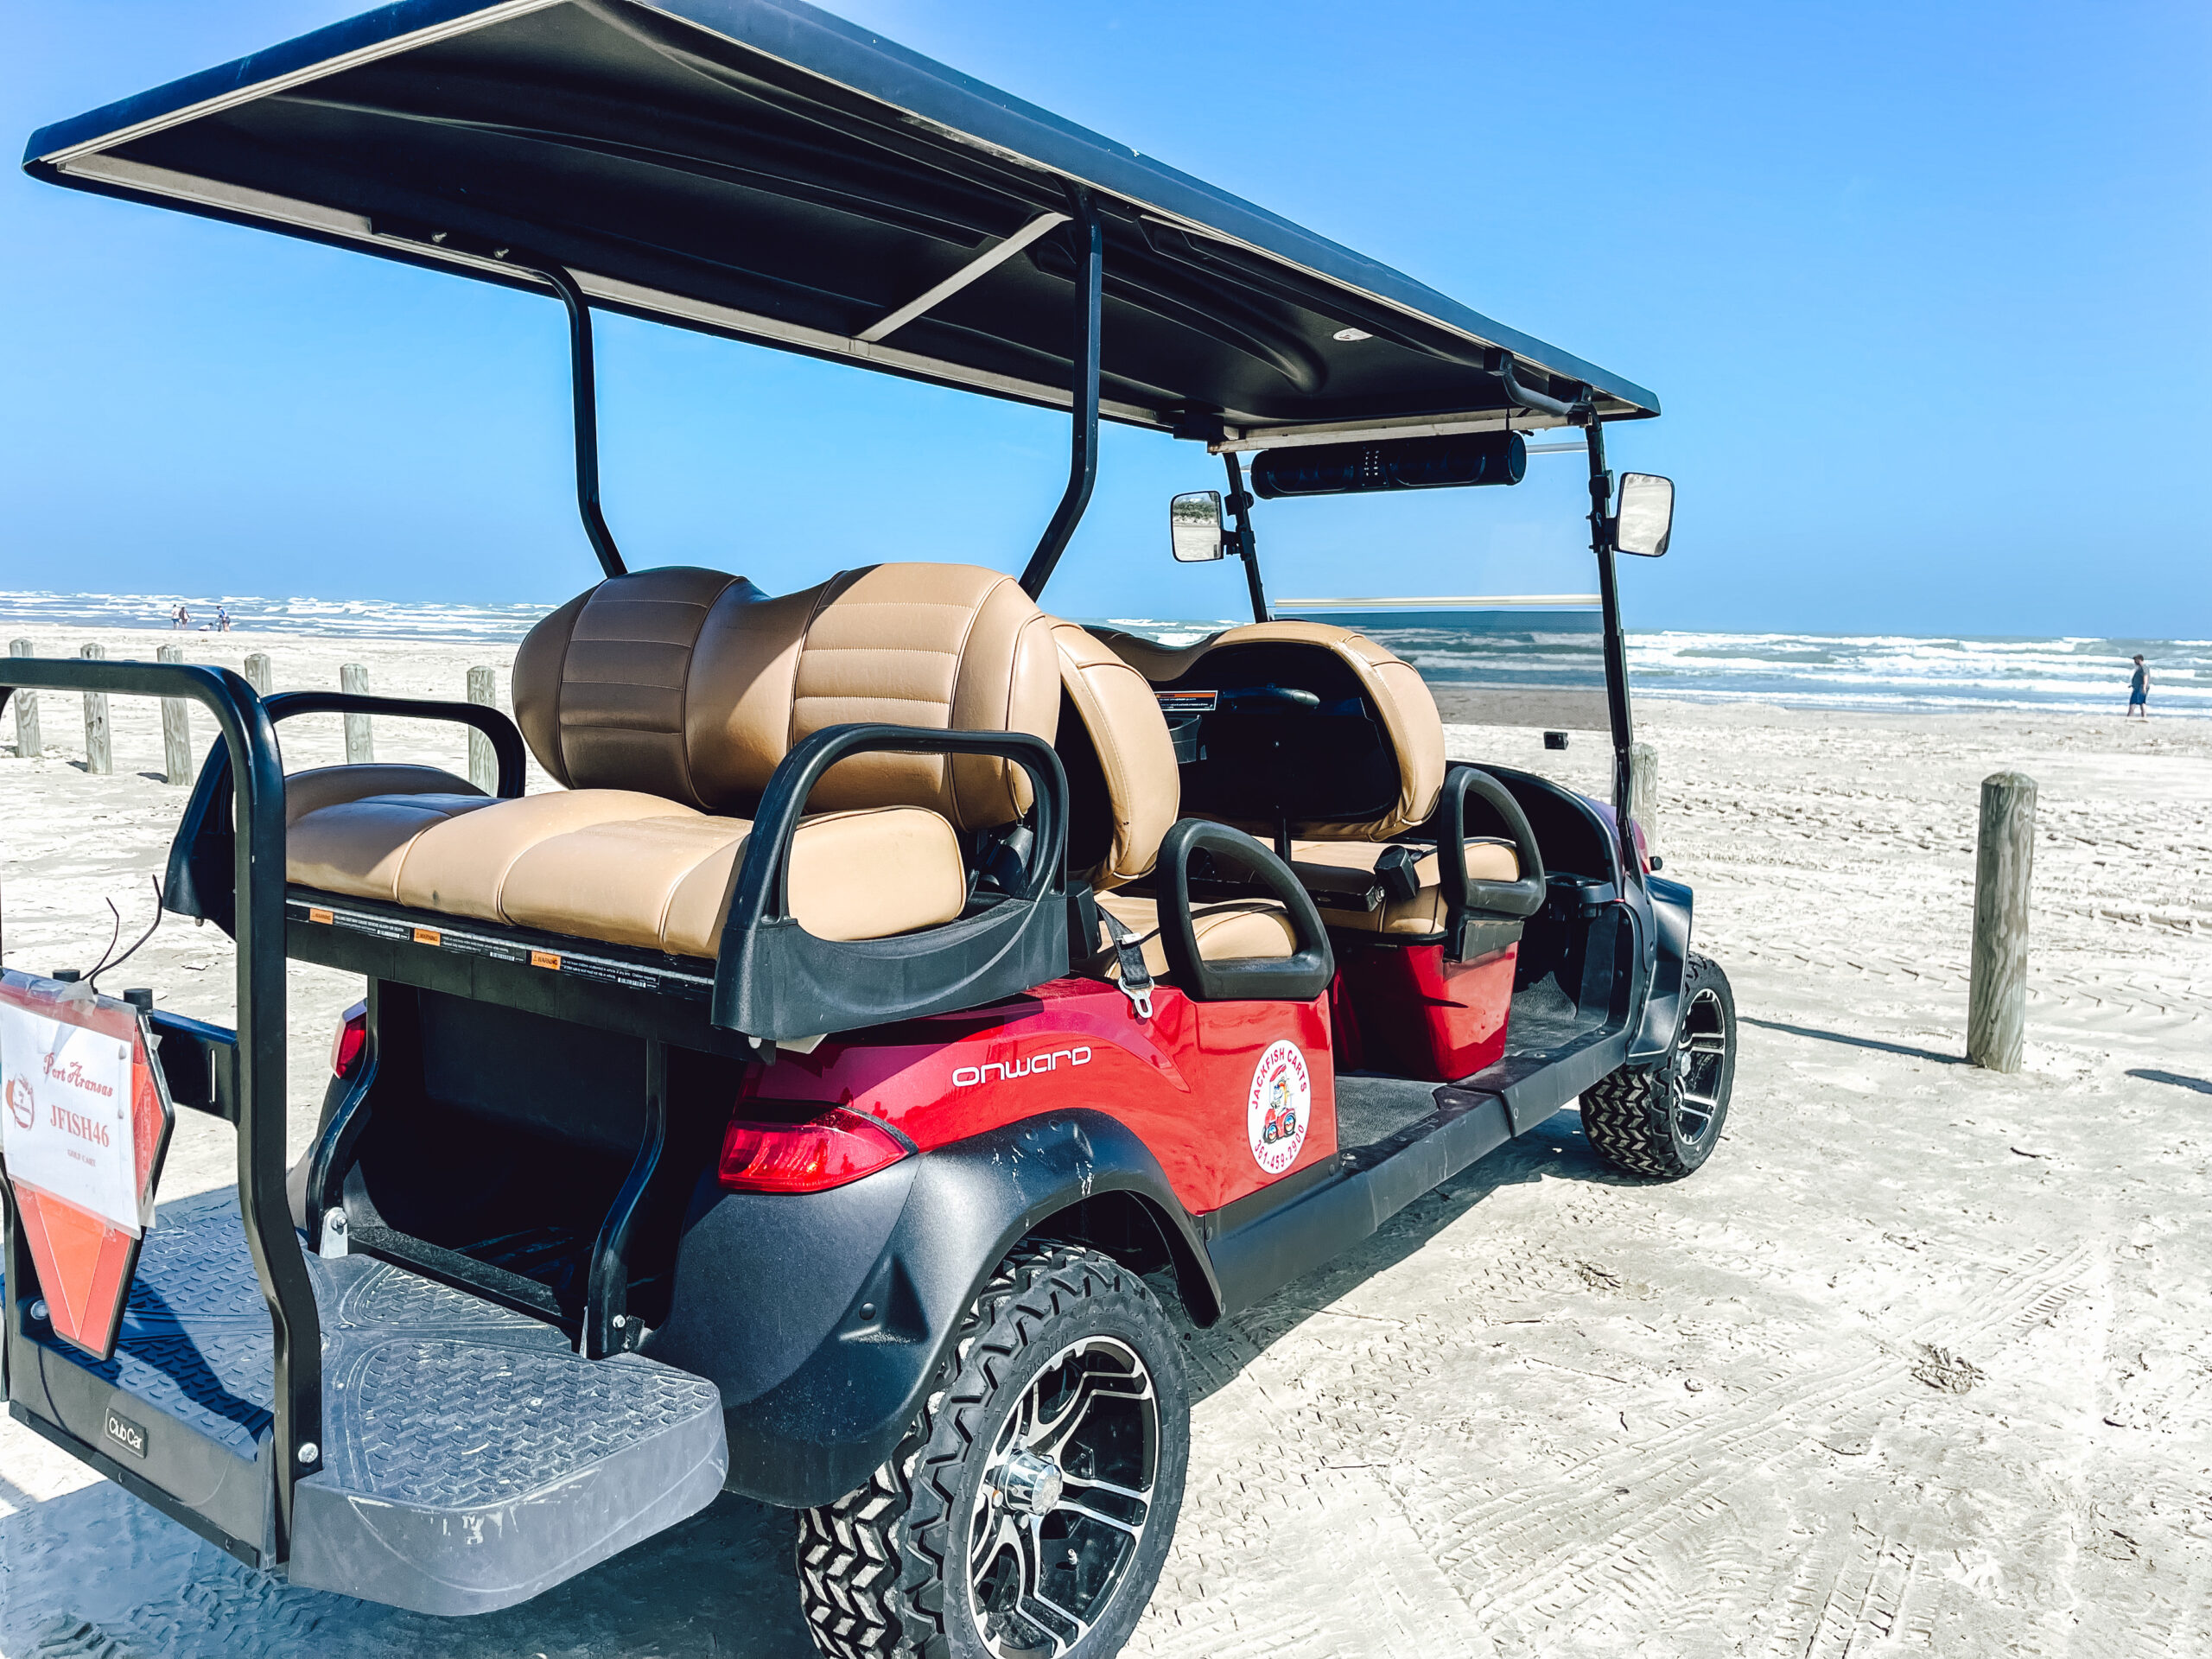 jackfish signature golf cart parked at the beach in port aransas, texas